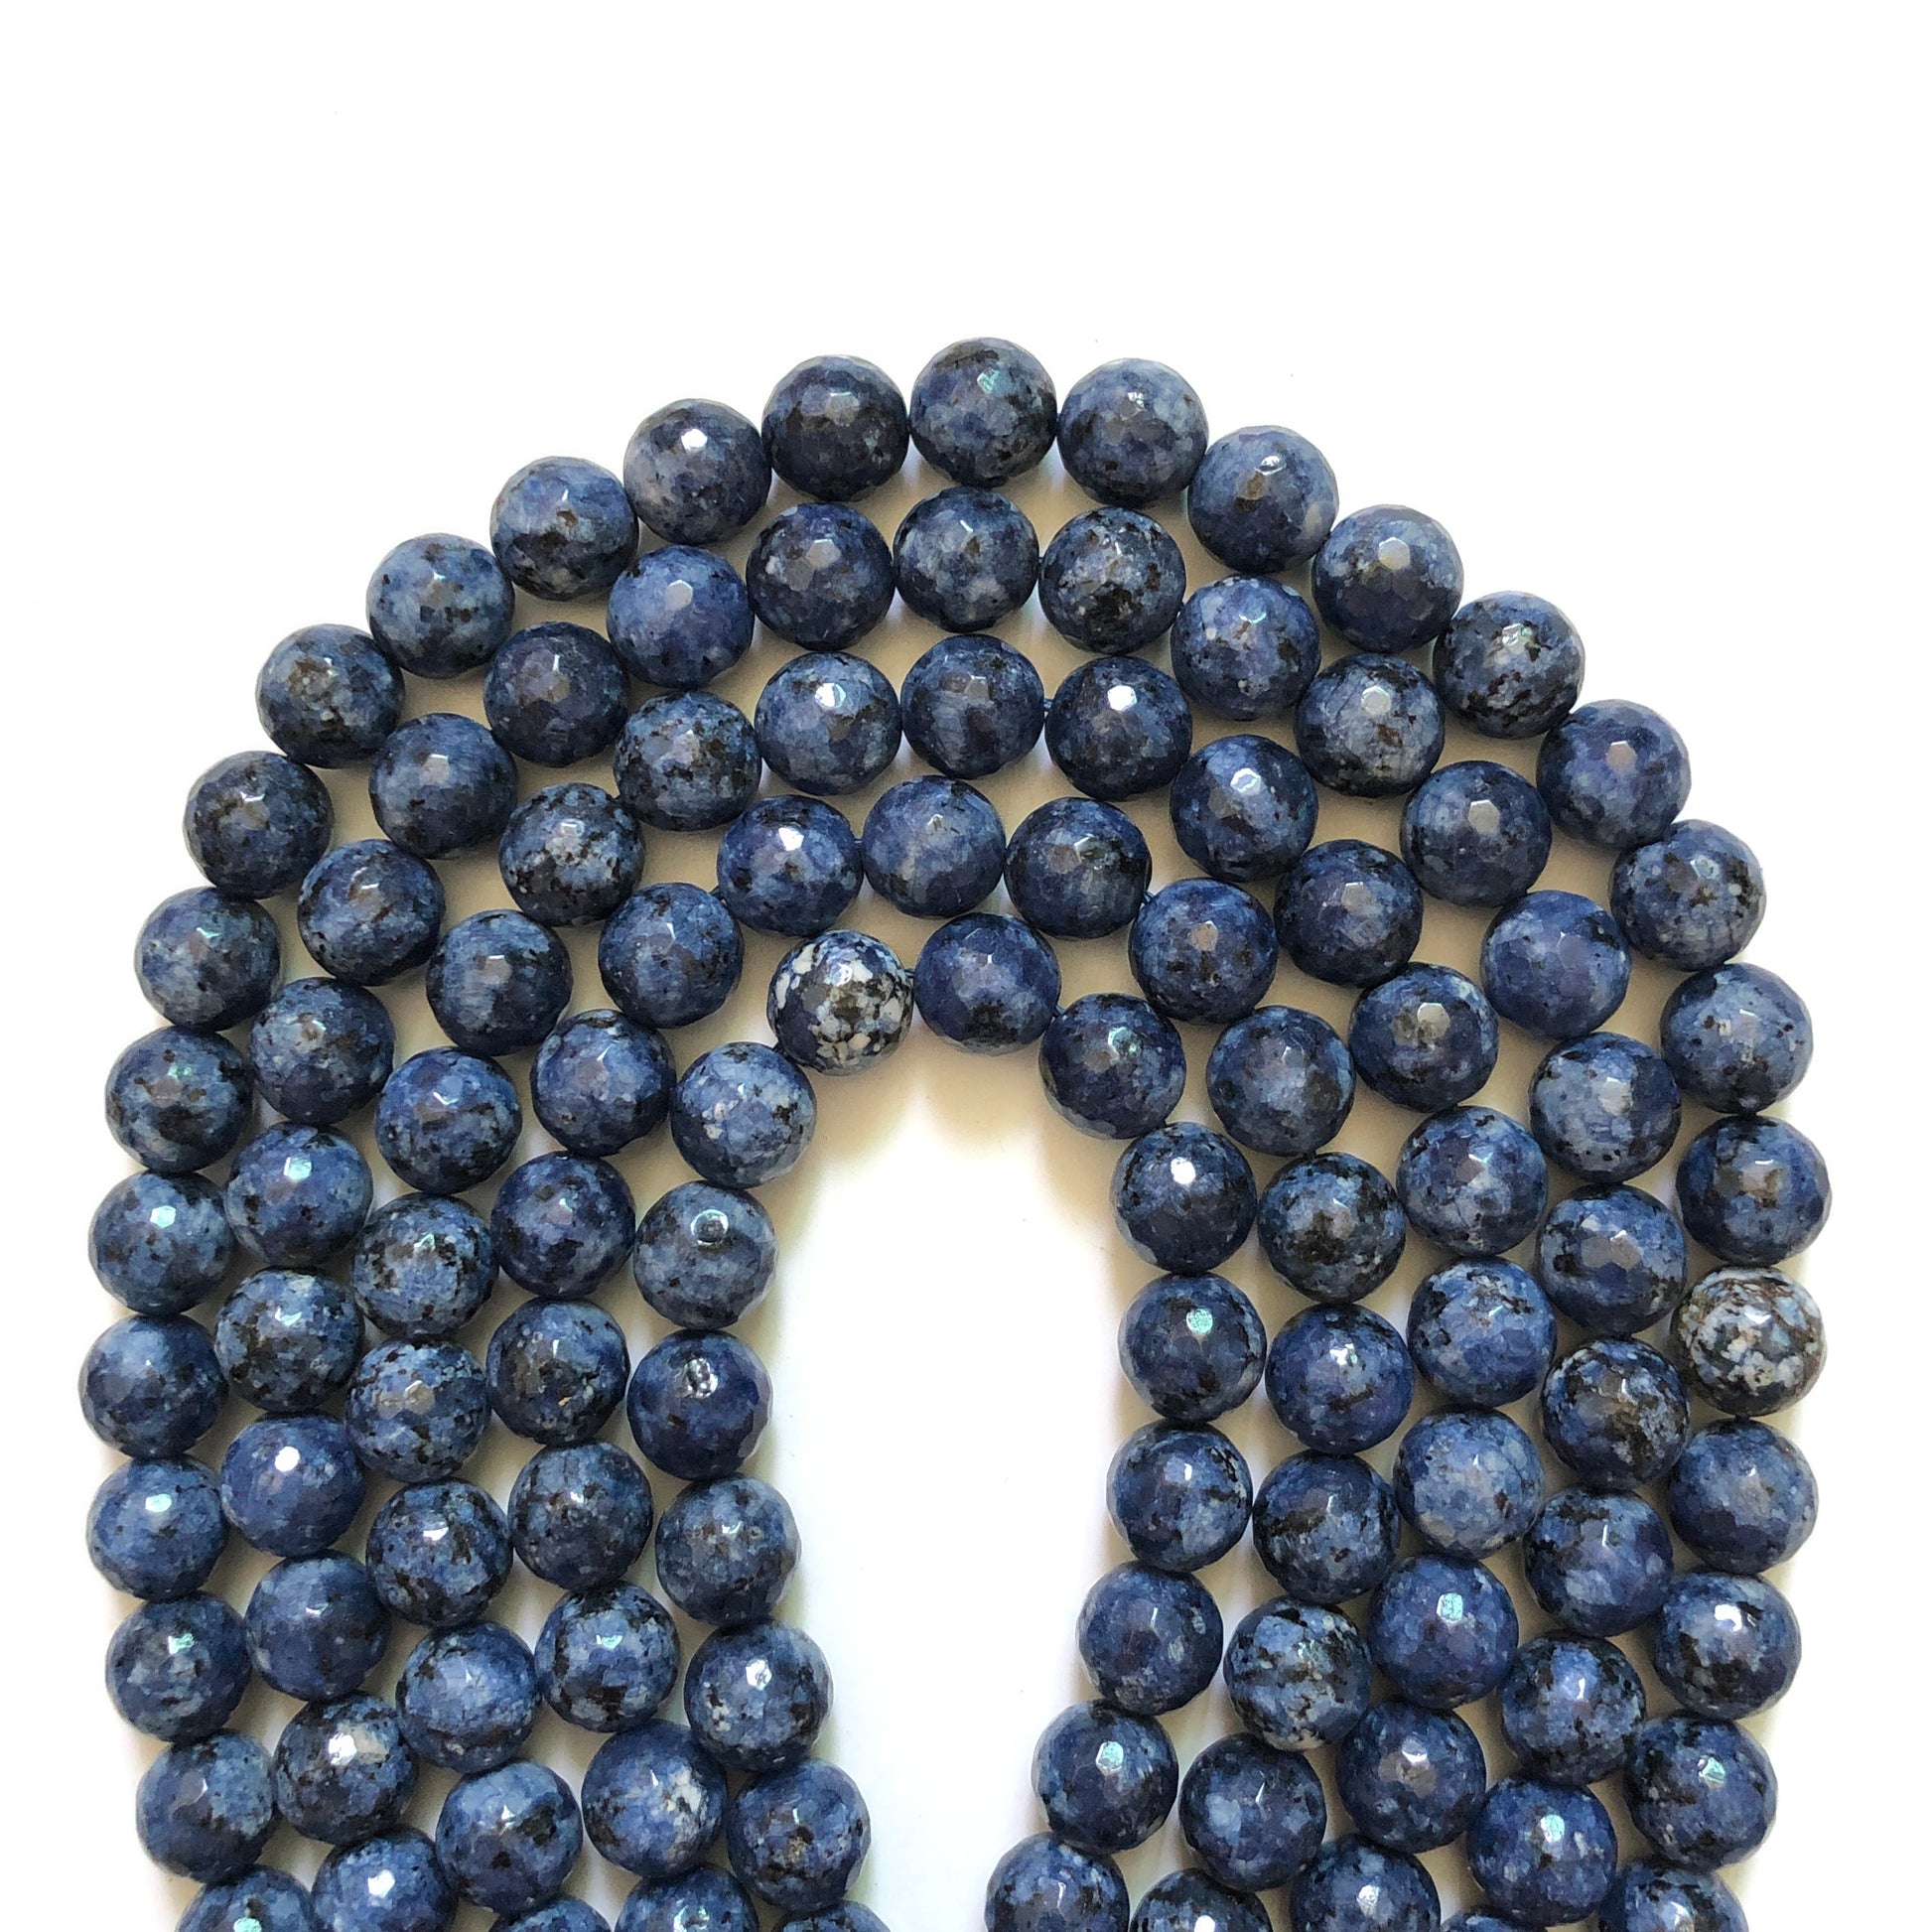 2 Strands/lot 10mm Dark Blue Kiwi Jasper Faceted Stone Beads Stone Beads Jasper Beads Charms Beads Beyond